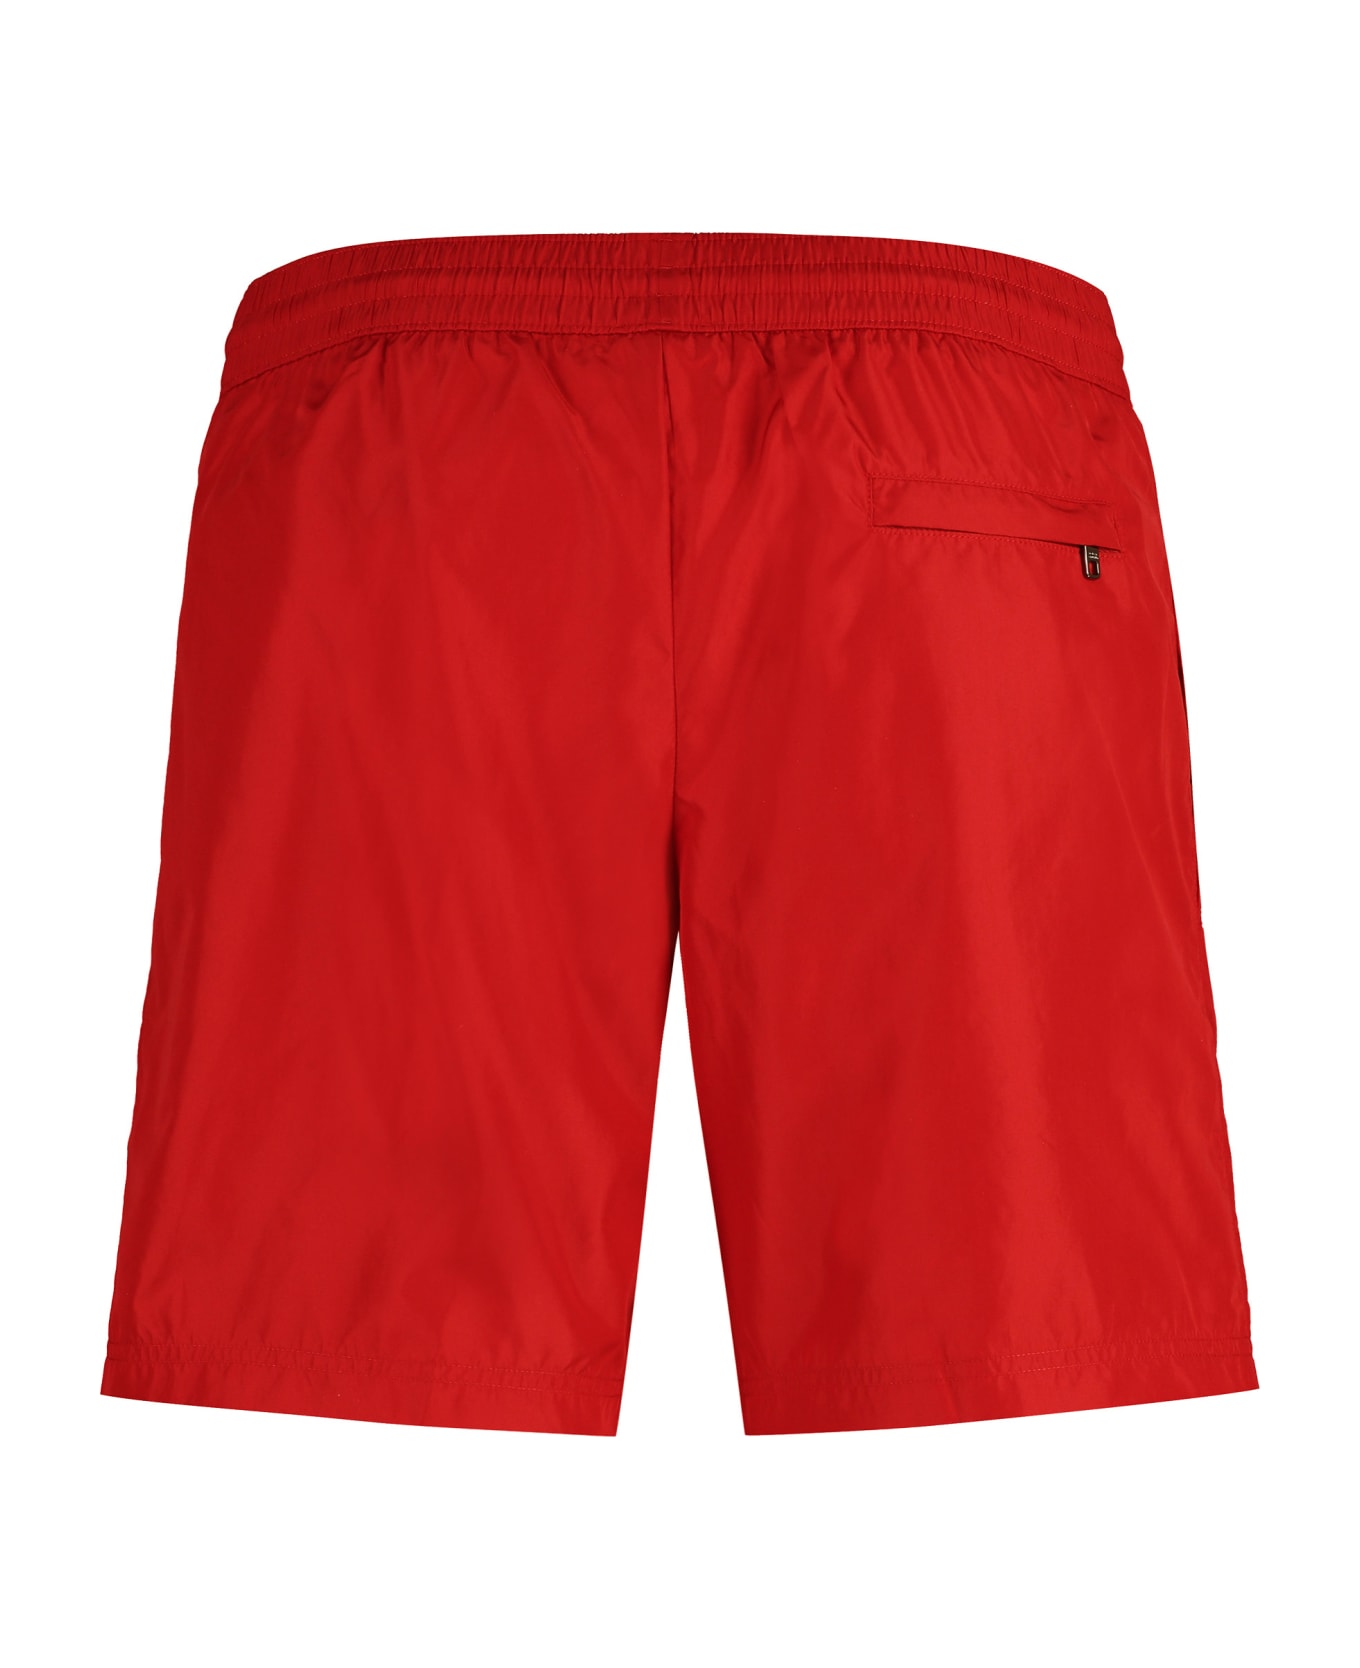 Dolce & Gabbana Nylon Swim Shorts - red